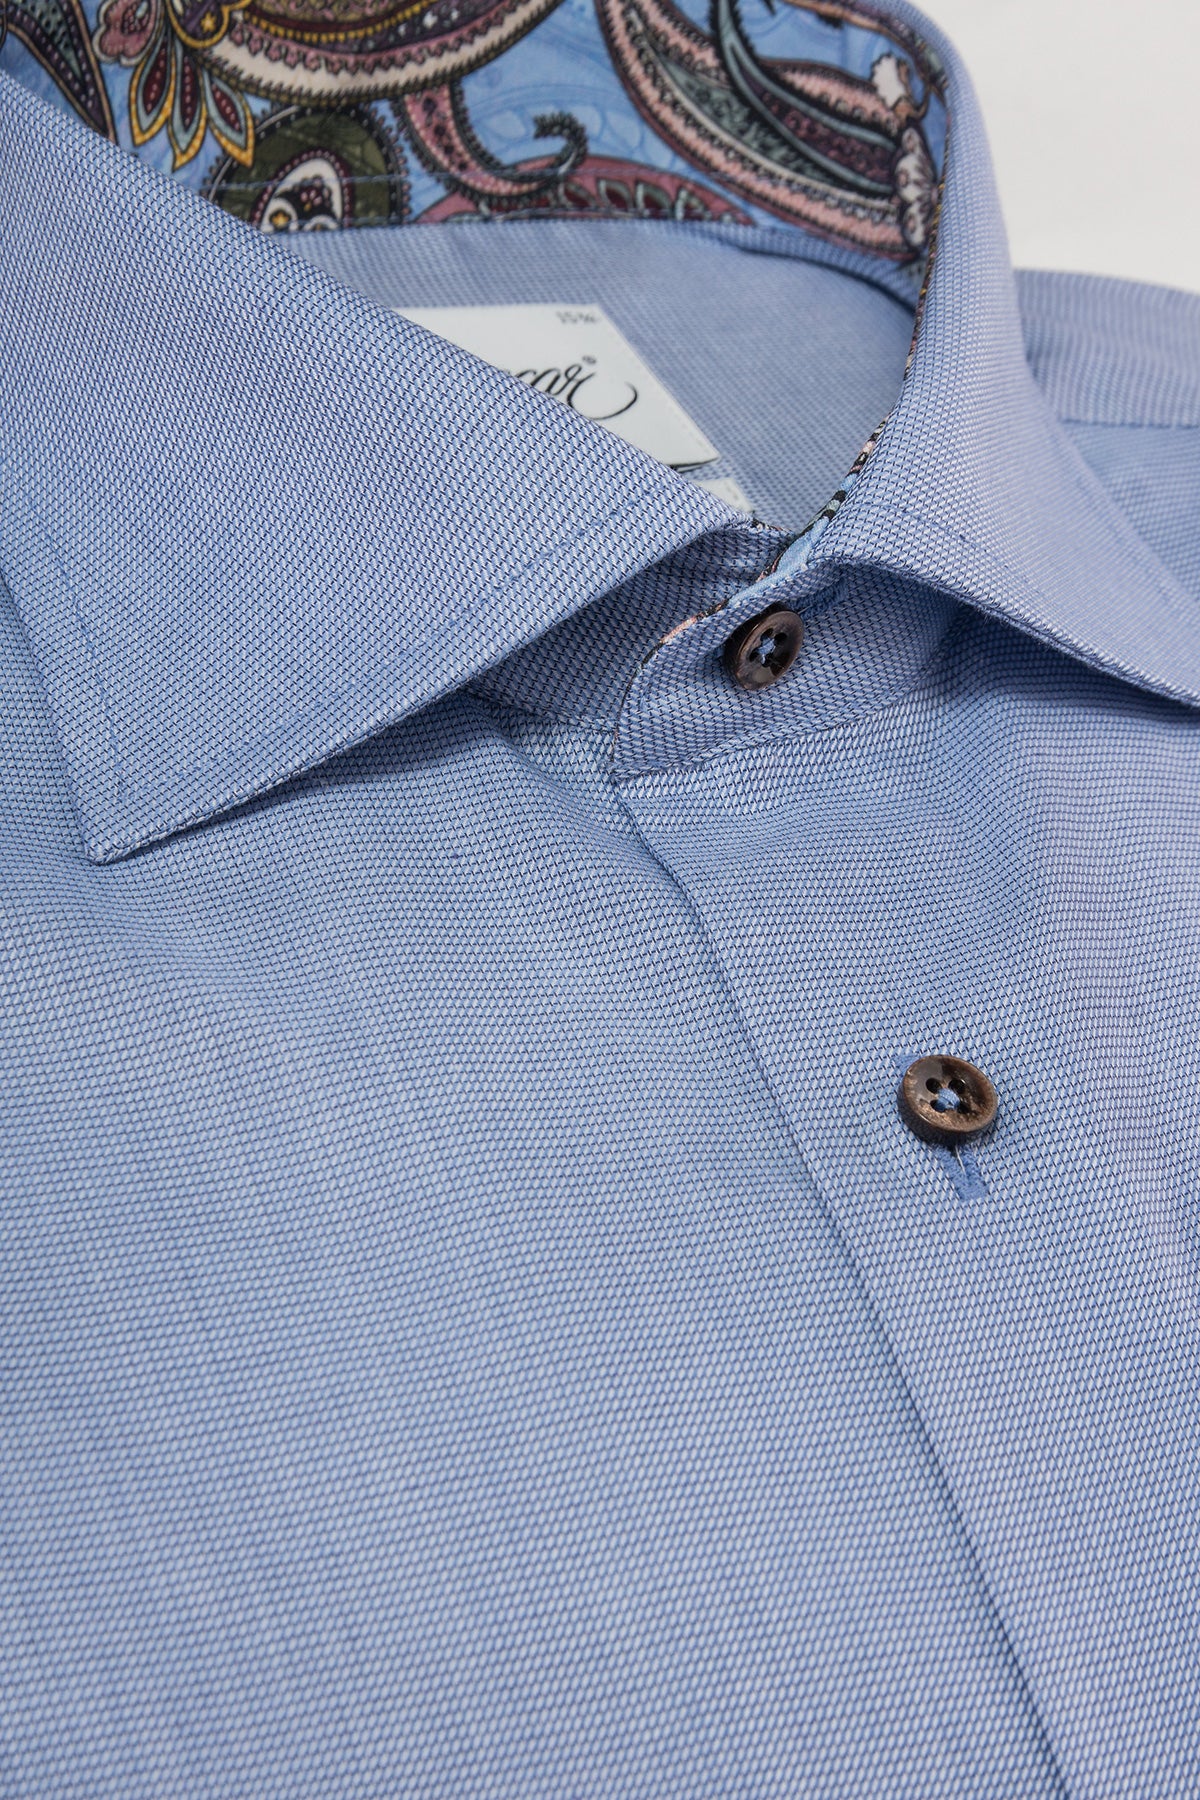 Blue slim fit shirt with contrast details